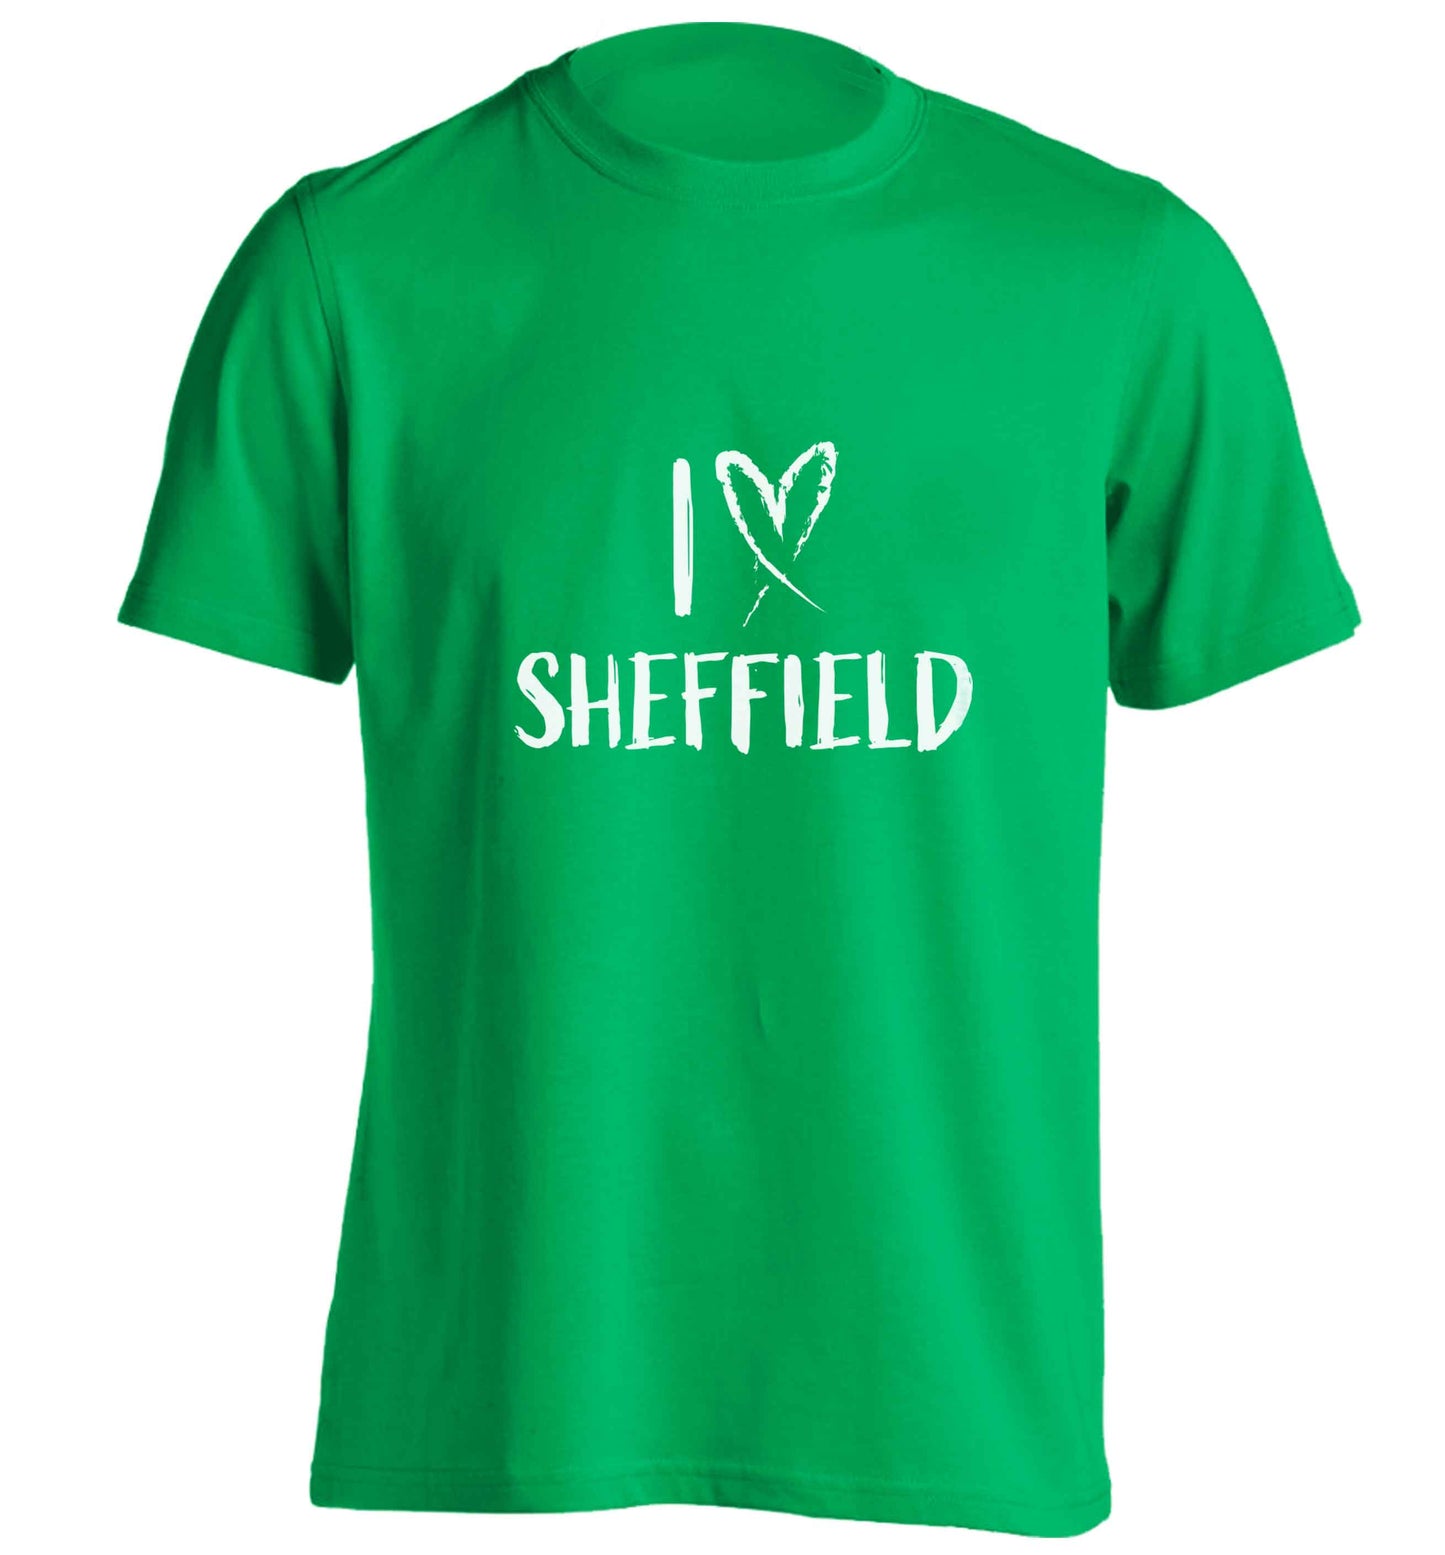 I love Sheffield adults unisex green Tshirt 2XL